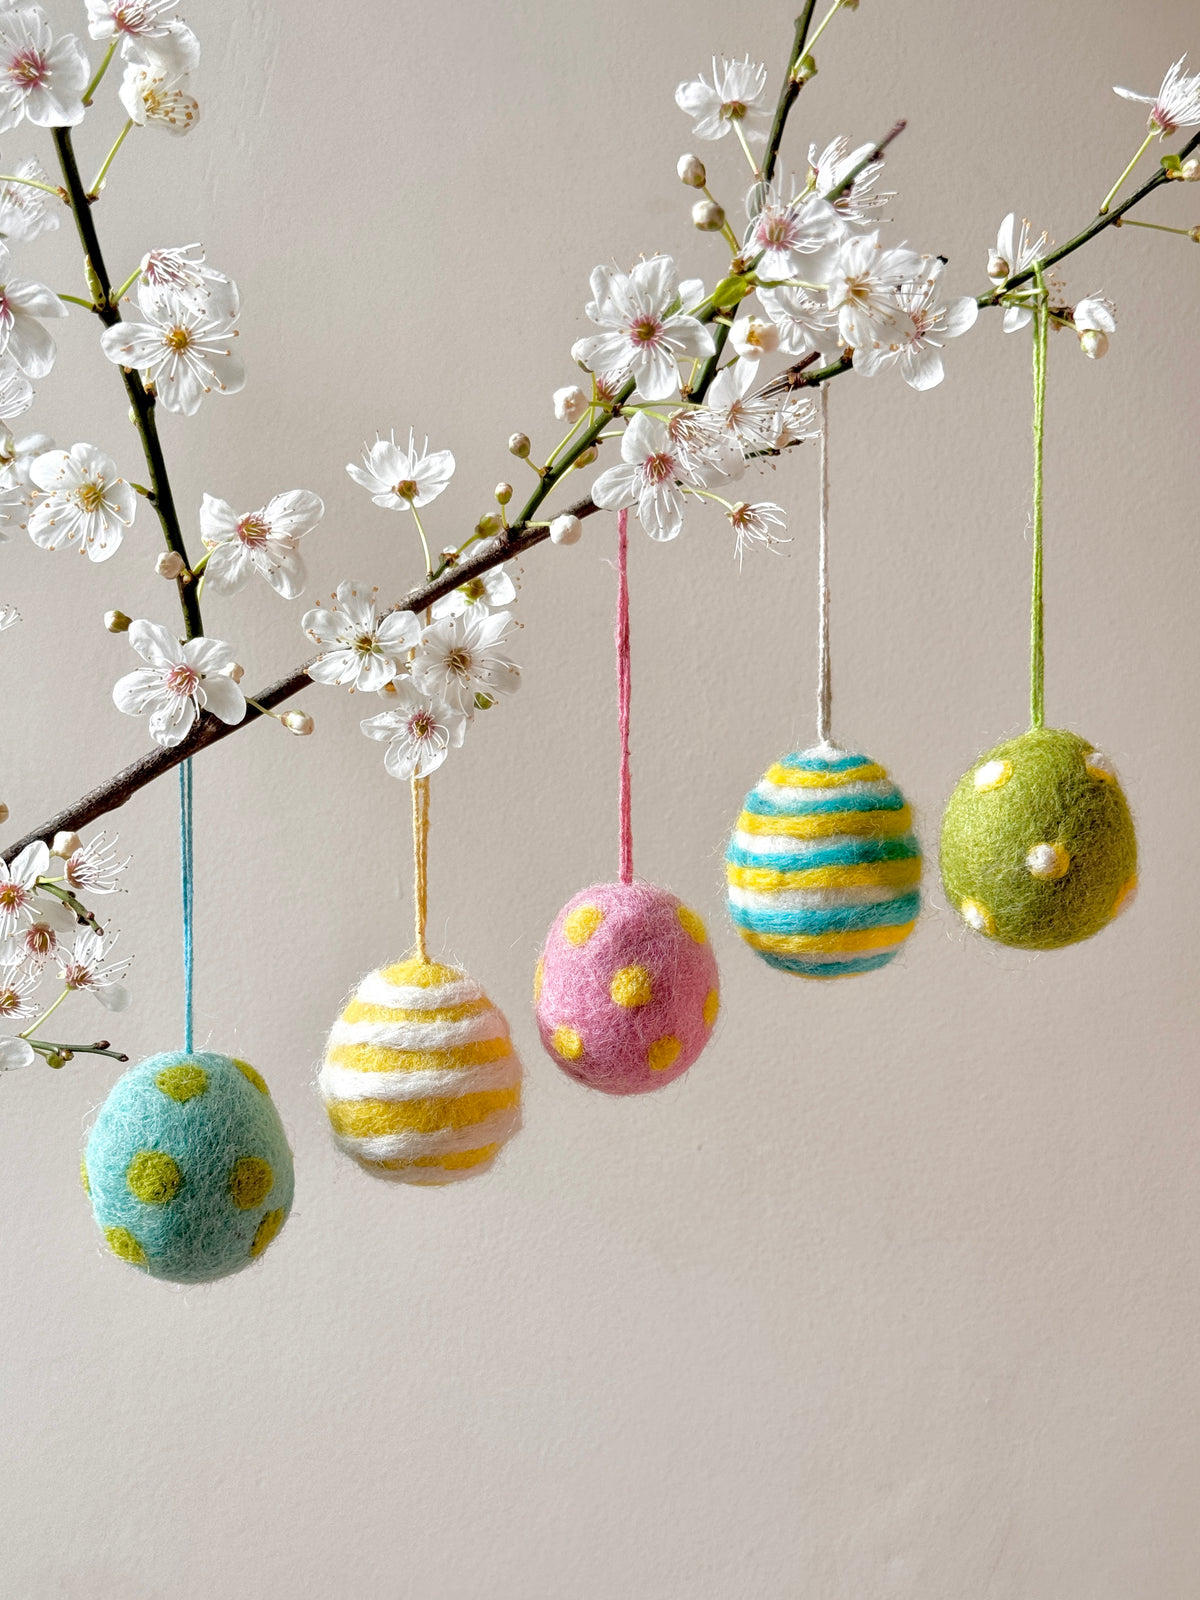 Set of Five Handmade Felt Easter Egg Decorations